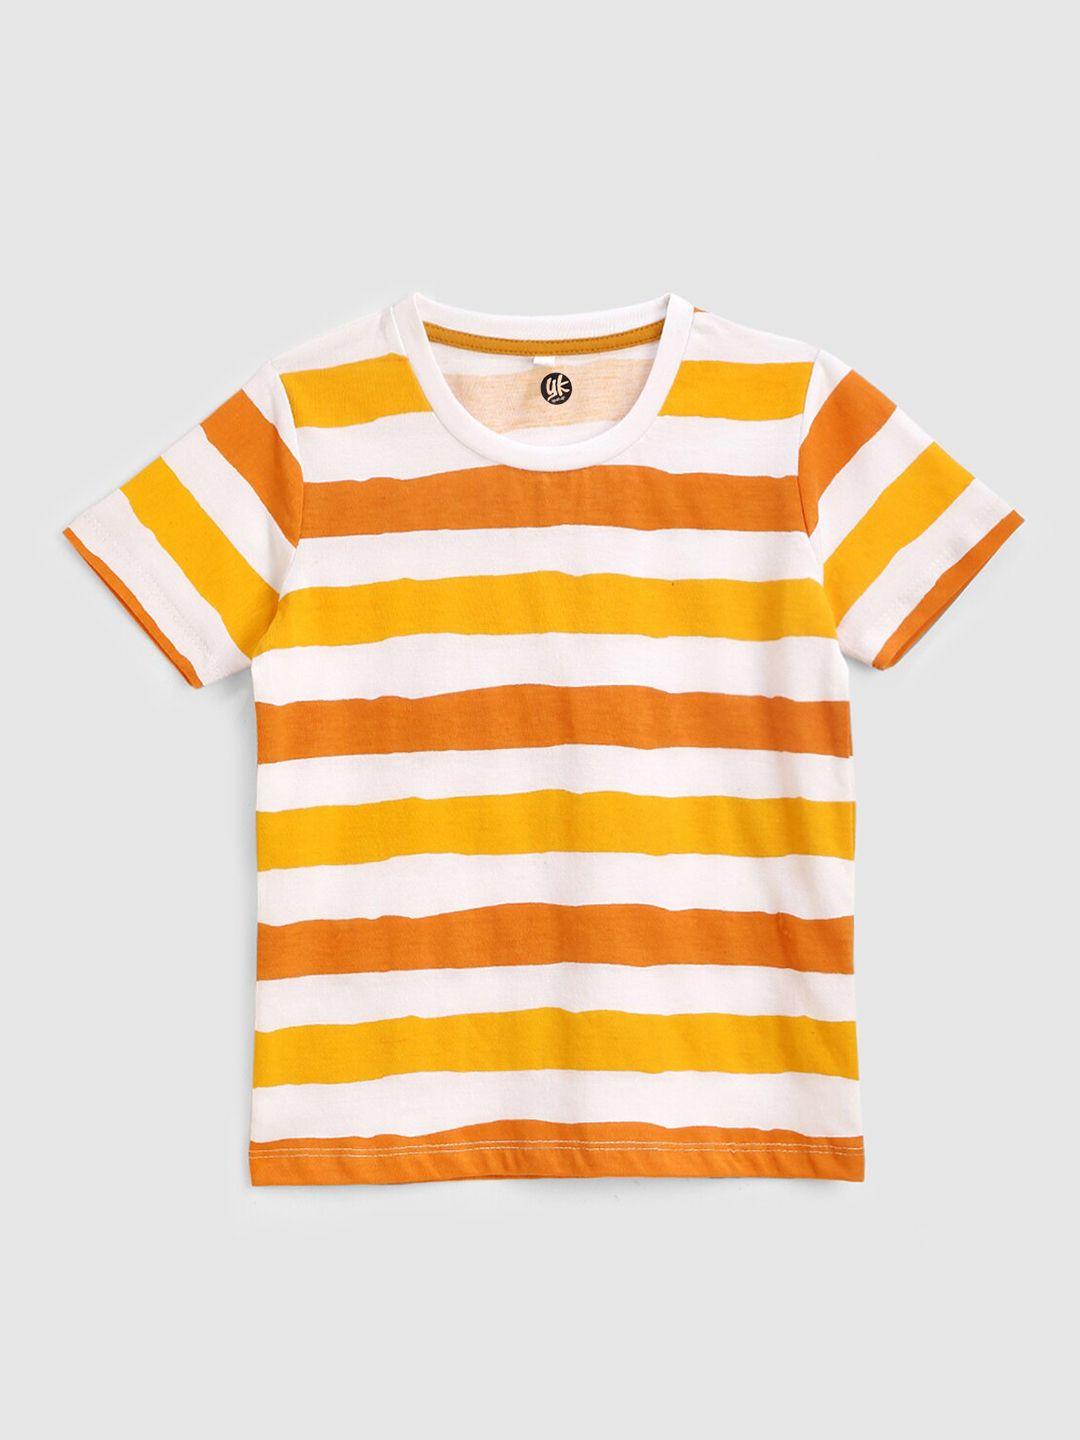 yk boys white & yellow striped running cotton t-shirt